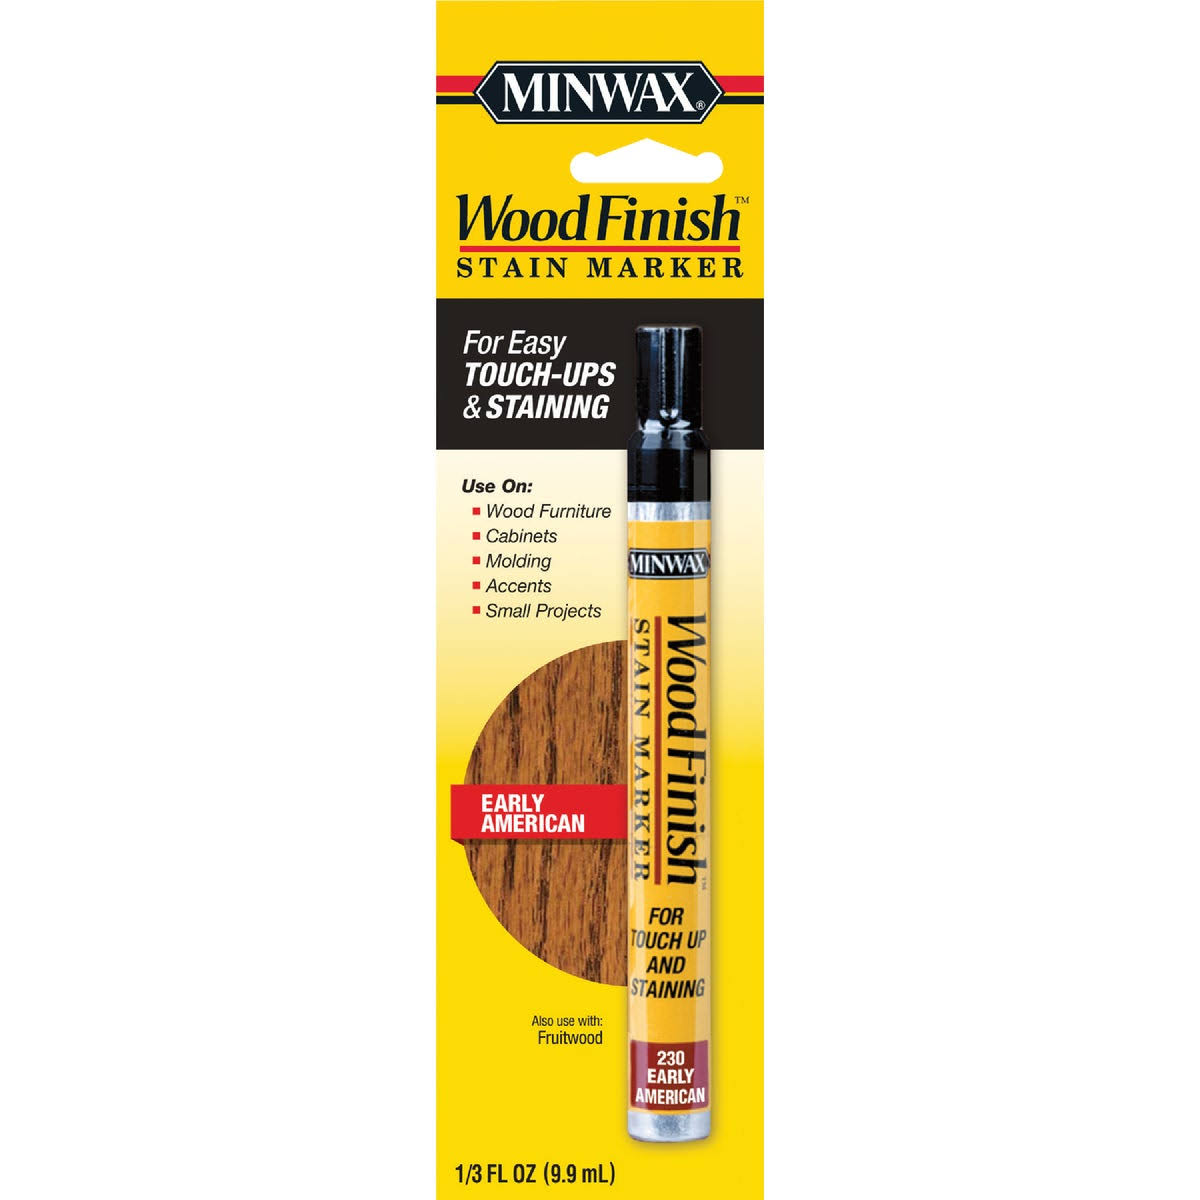 Minwax Wood Finish Stain Marker - 9.9ml